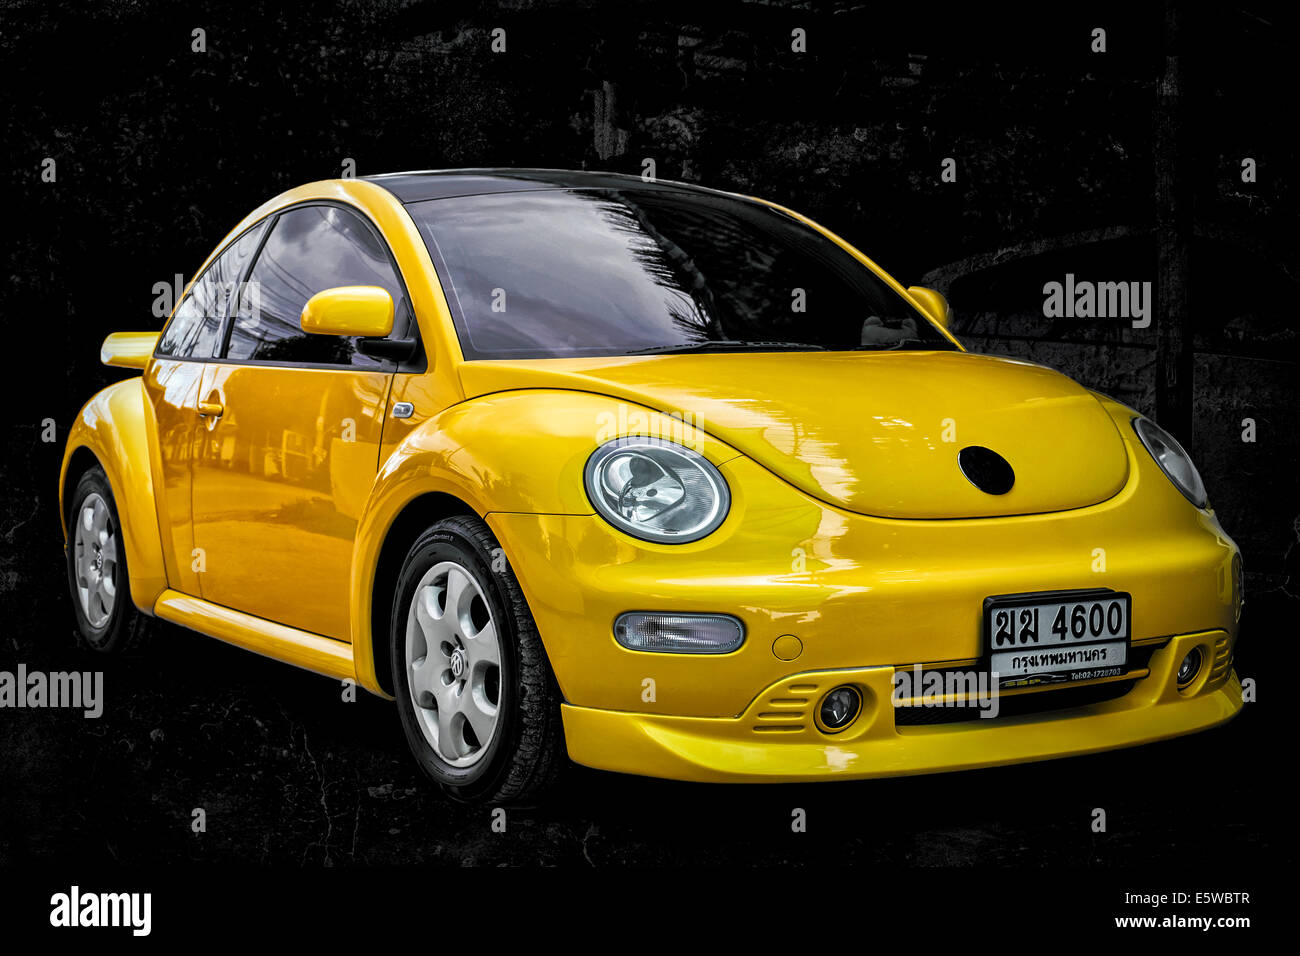 Volkswagen beetle. Vivid yellow modern VW Beetle motorcar against a black  background. Thailand S. E. Asia Stock Photo - Alamy